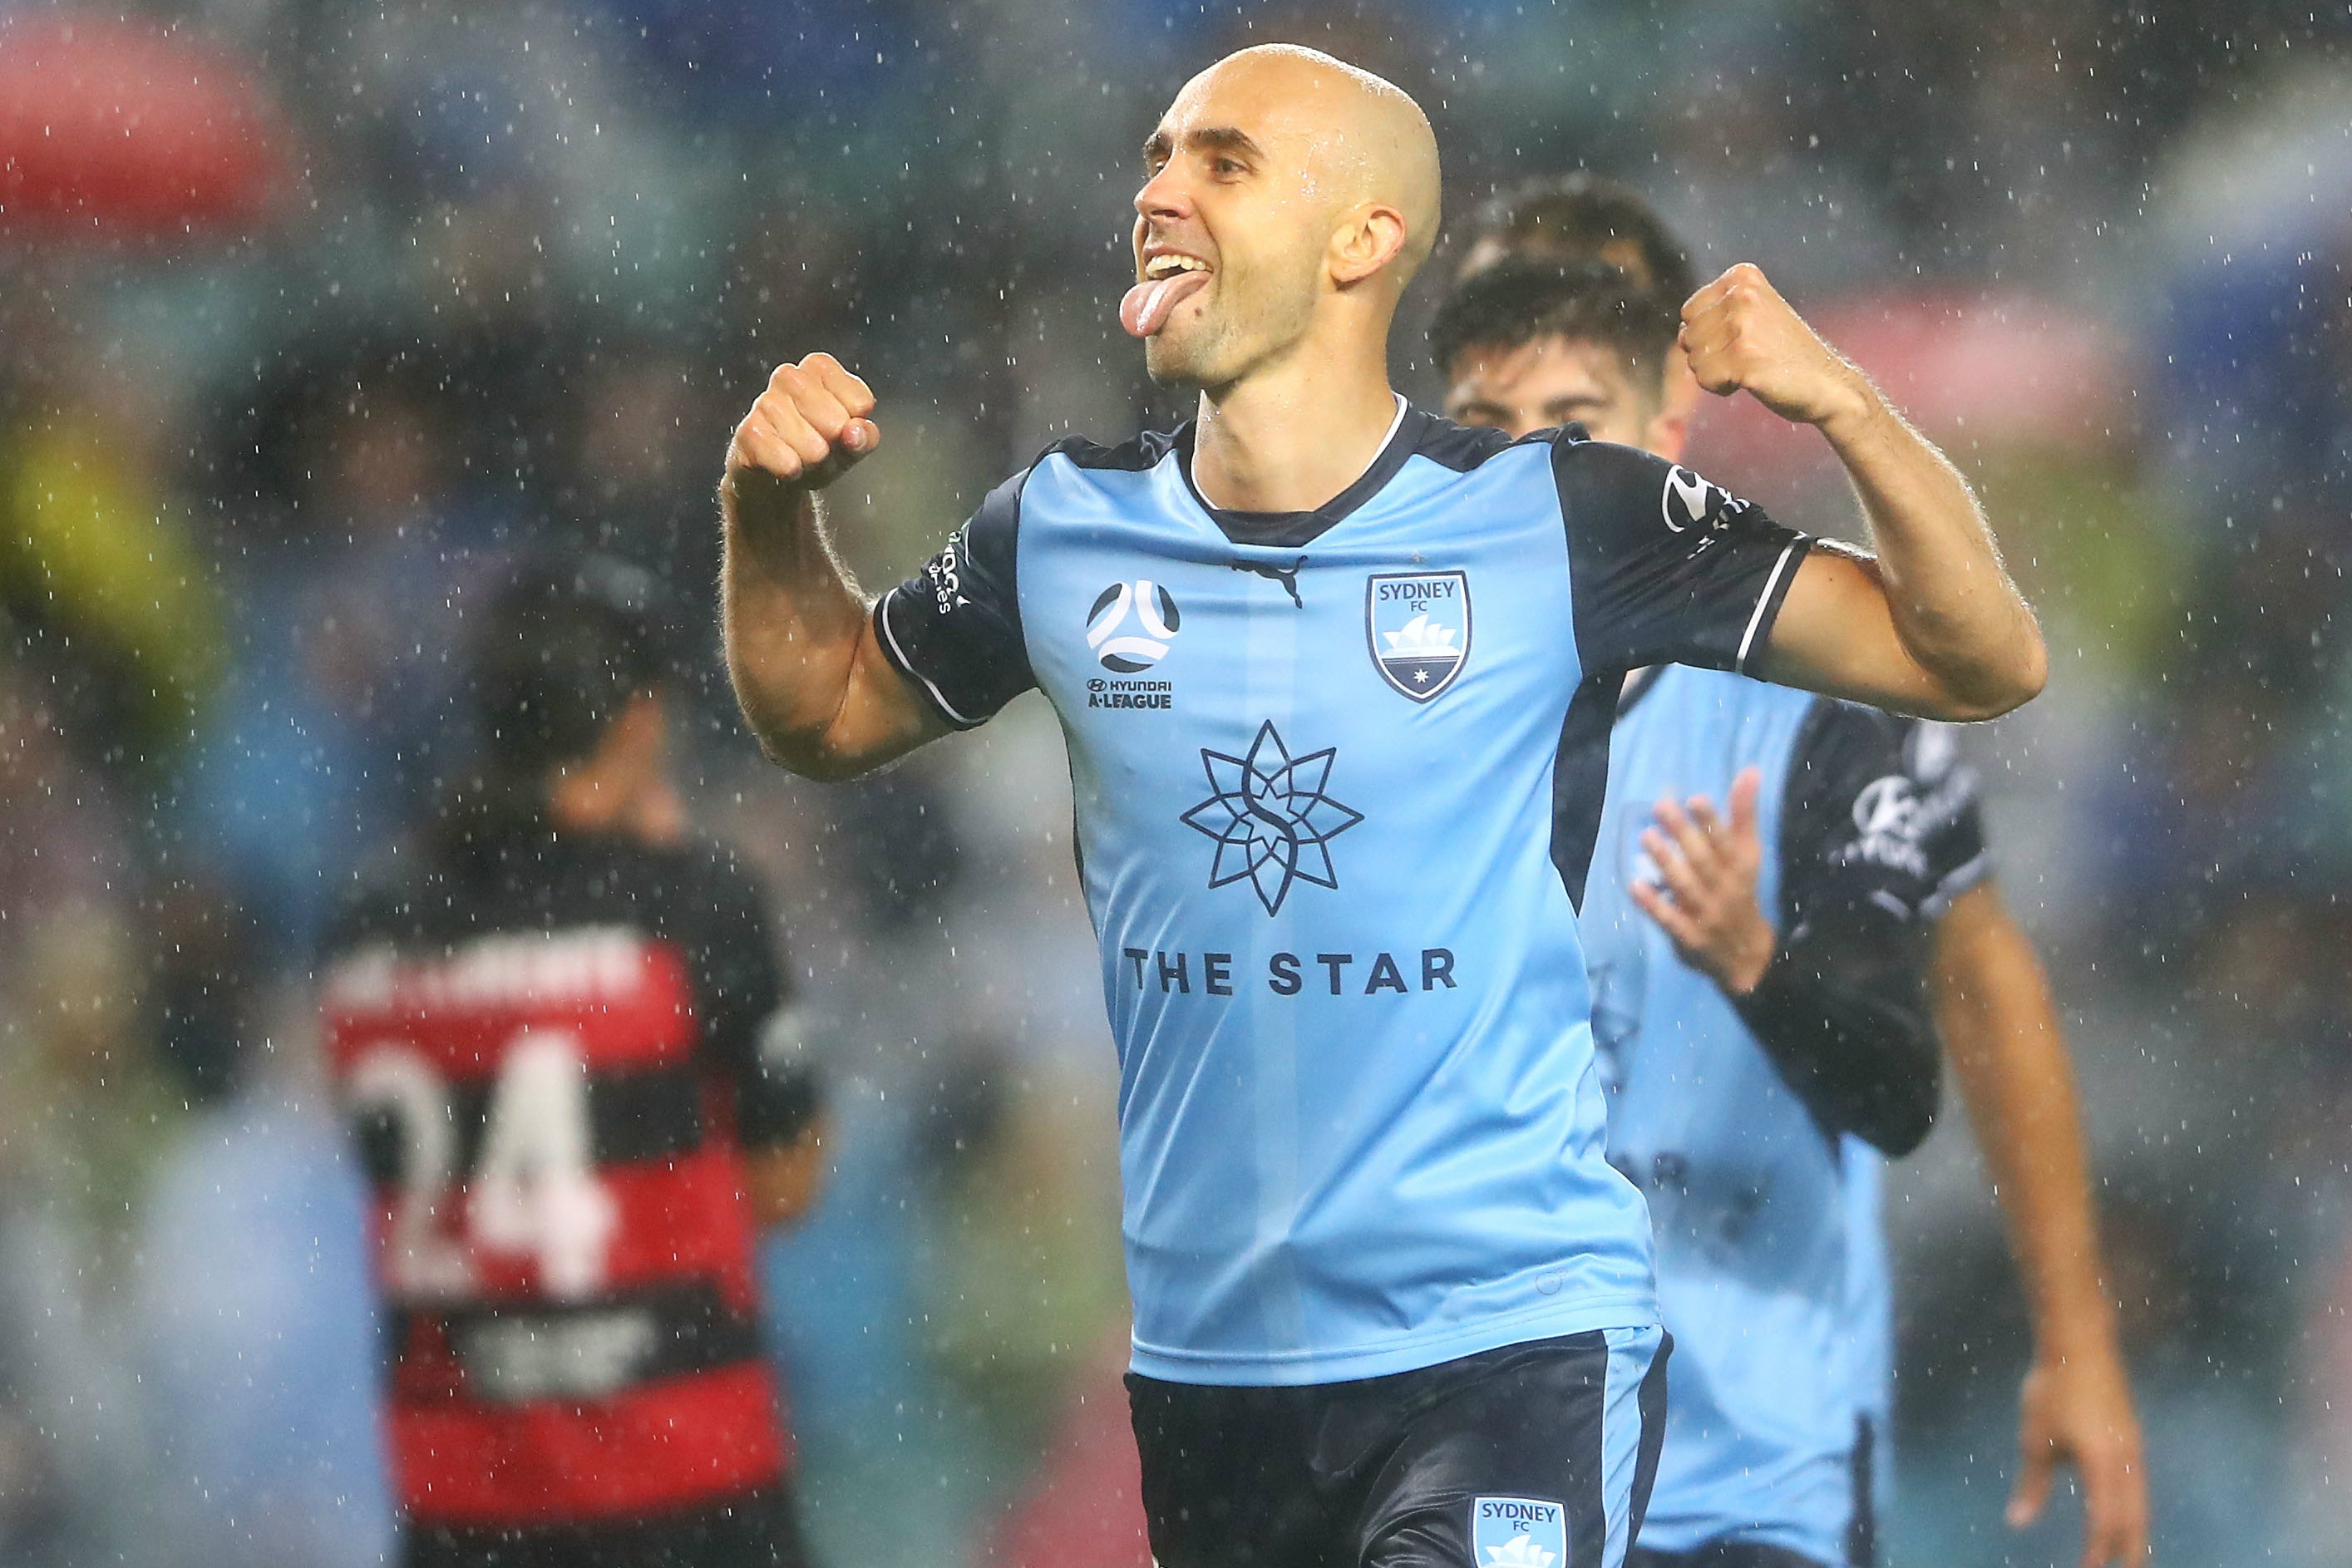 Derby 18: Despite going behind early, an Adrian Mierzejewski-inspired Sydney FC won 3-1 in the rain at Allianz Stadium.